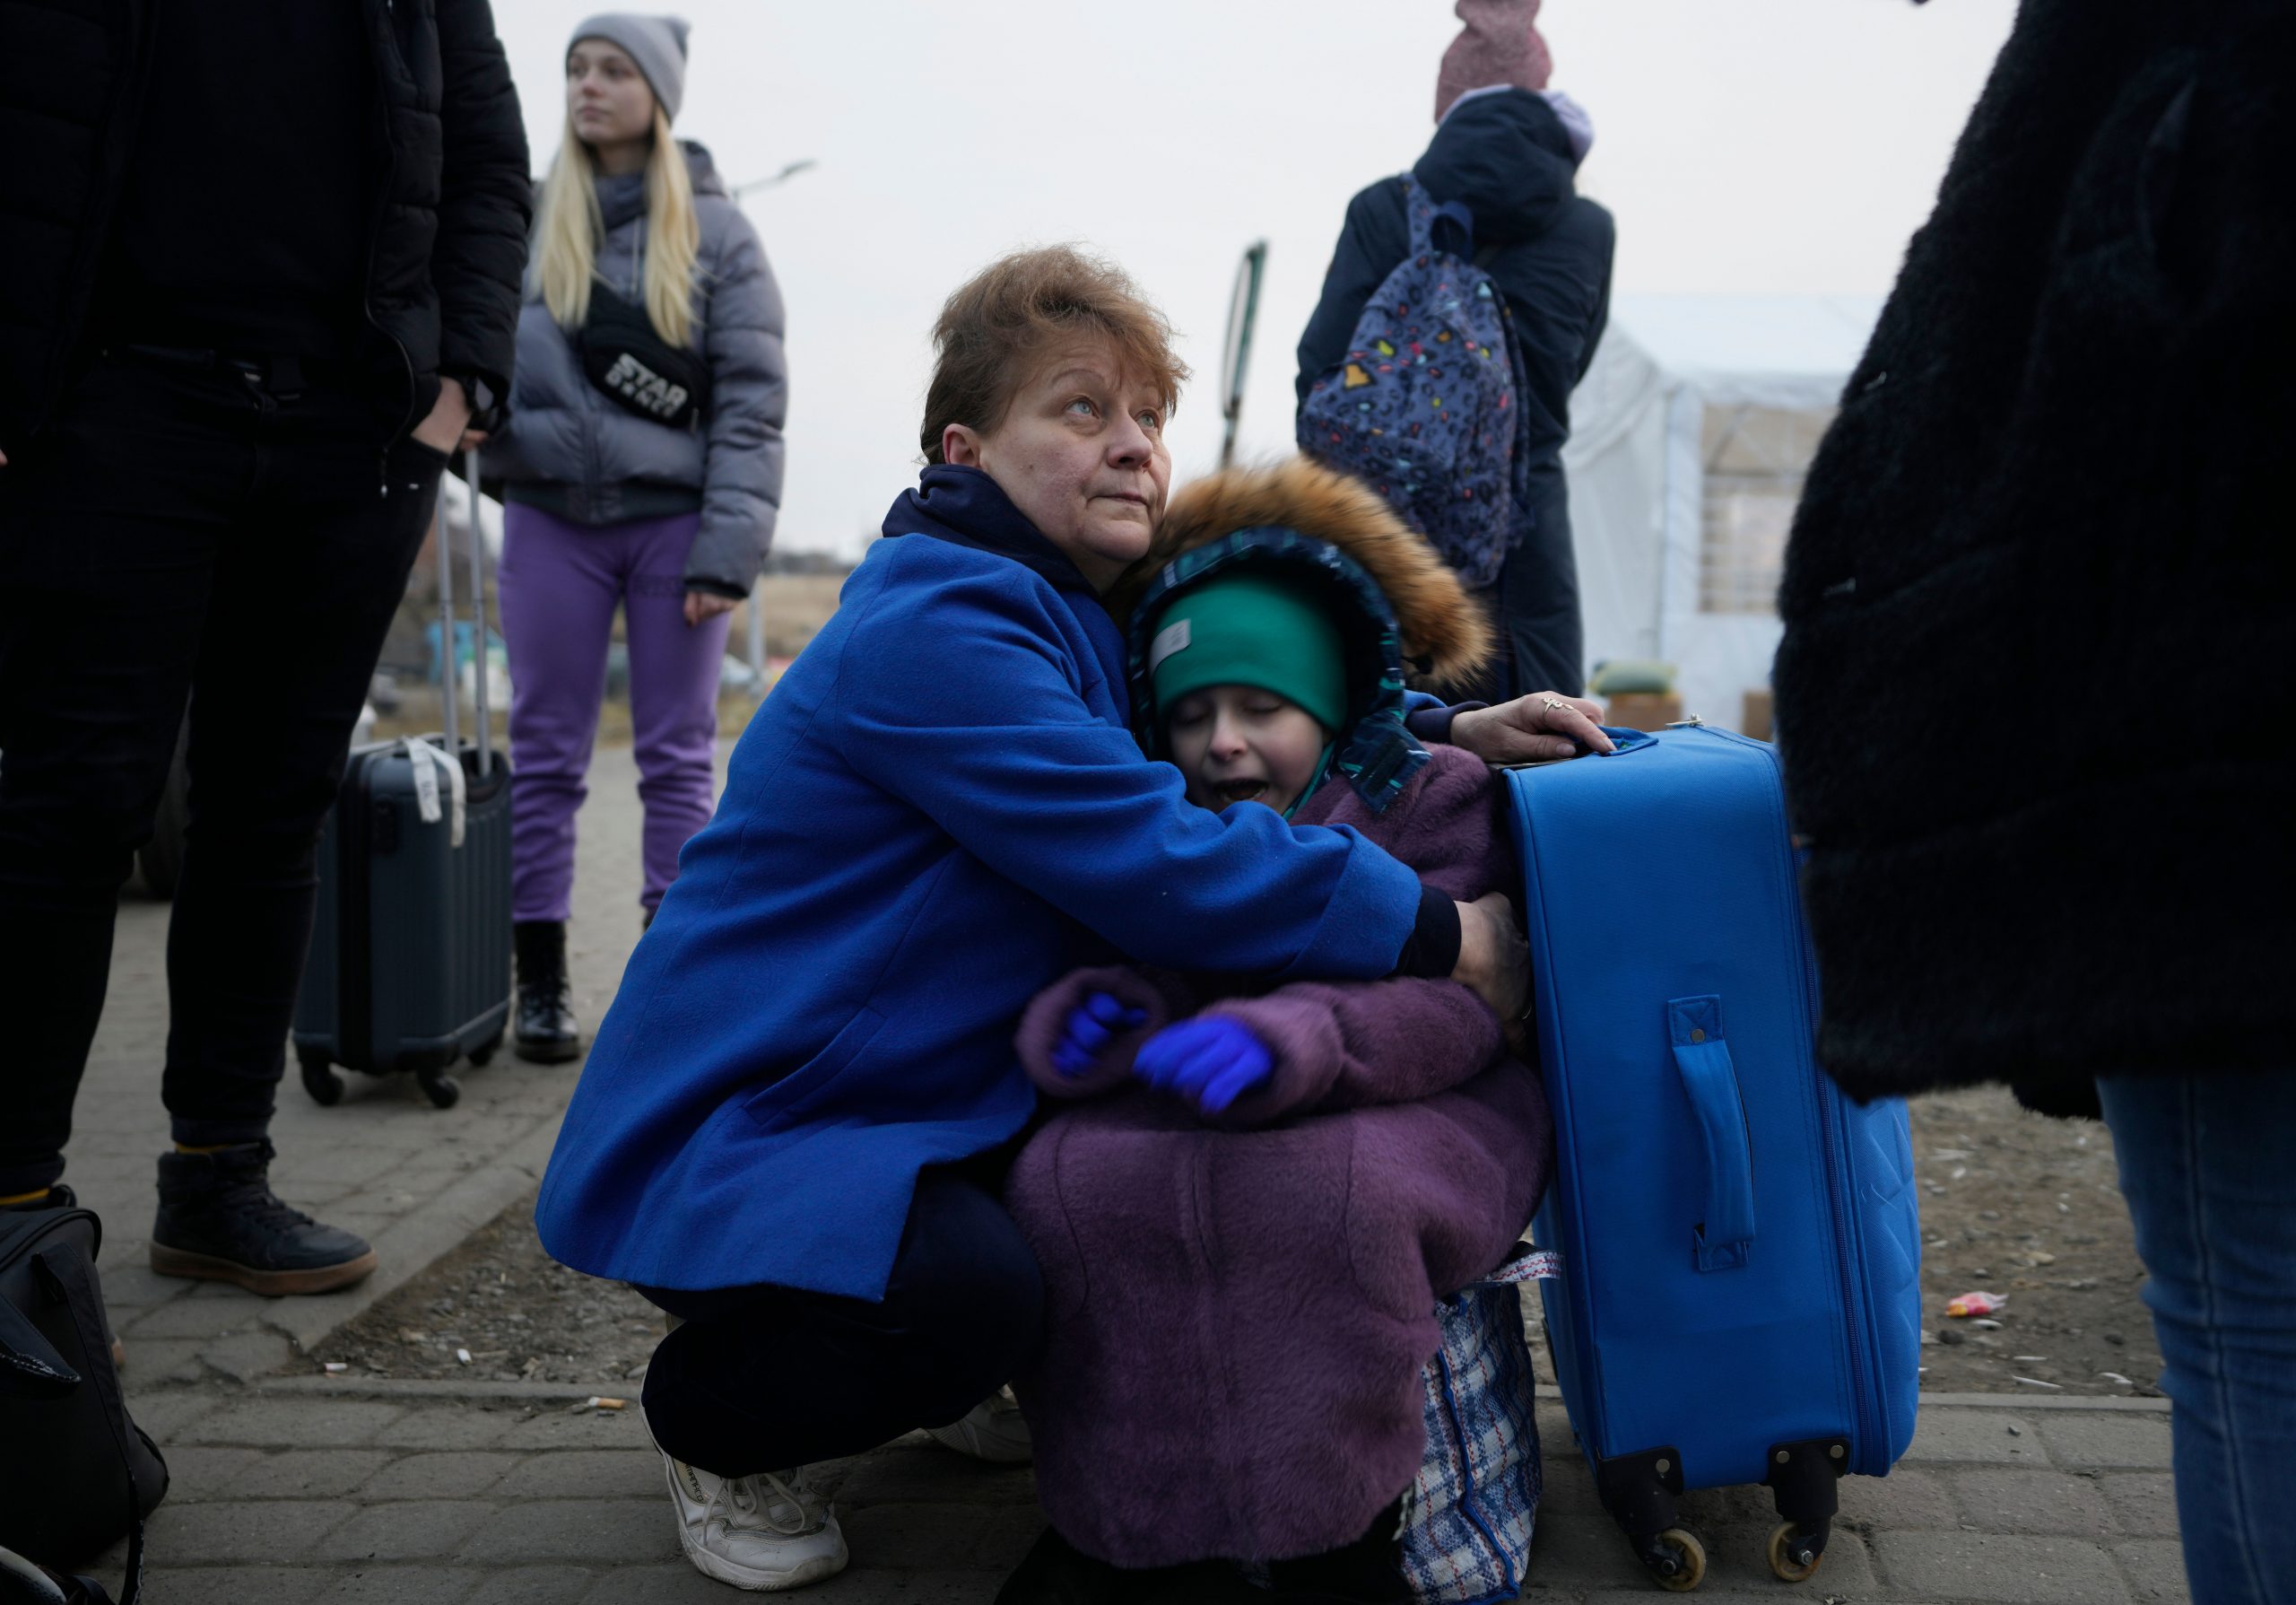 Ukraine crisis: Over 10 million people may flee their homes, UN estimates